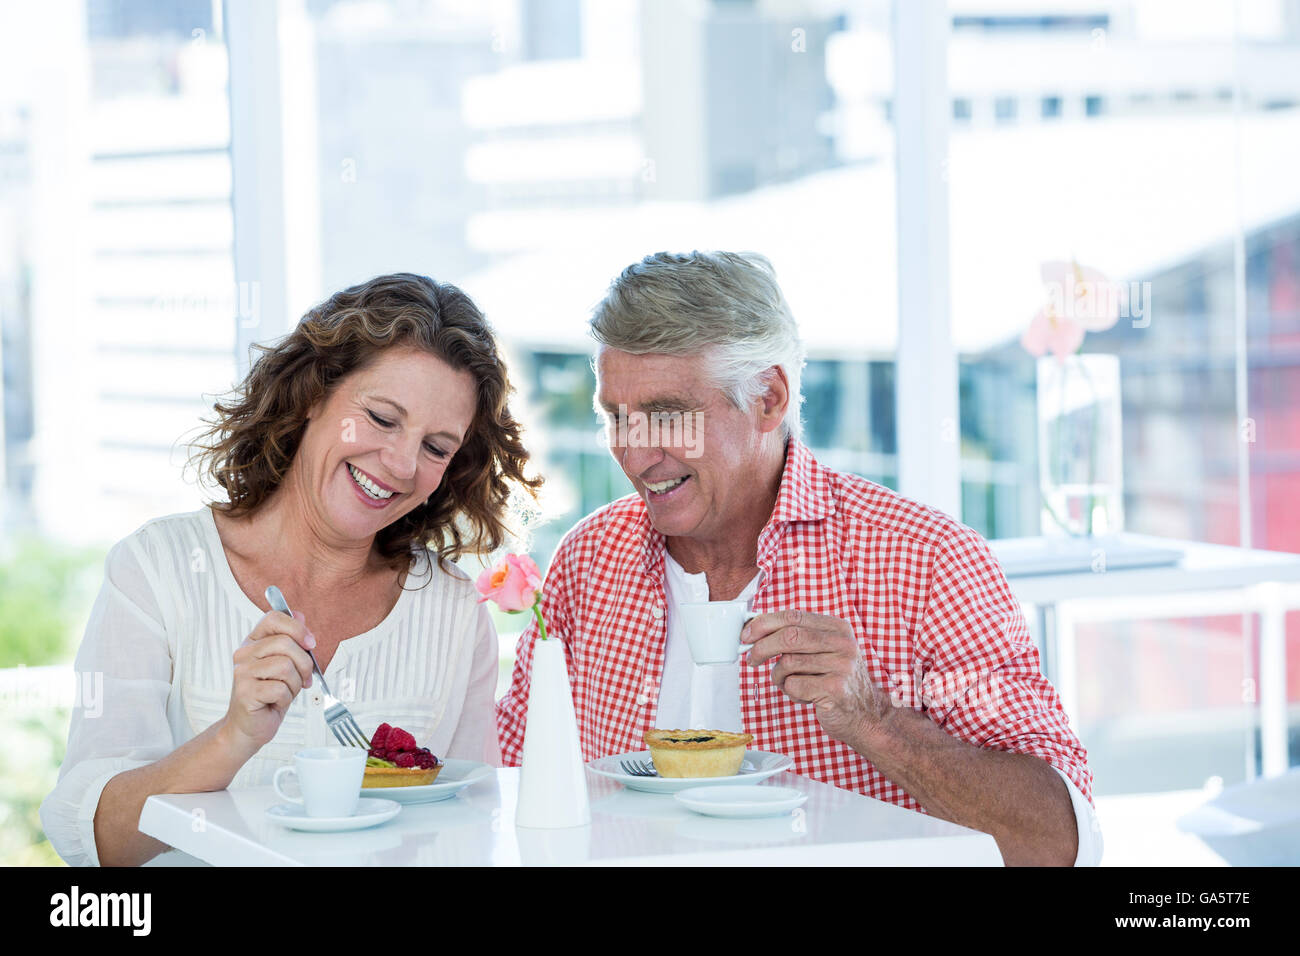 Couple enjoying food at restaurant Stock Photo